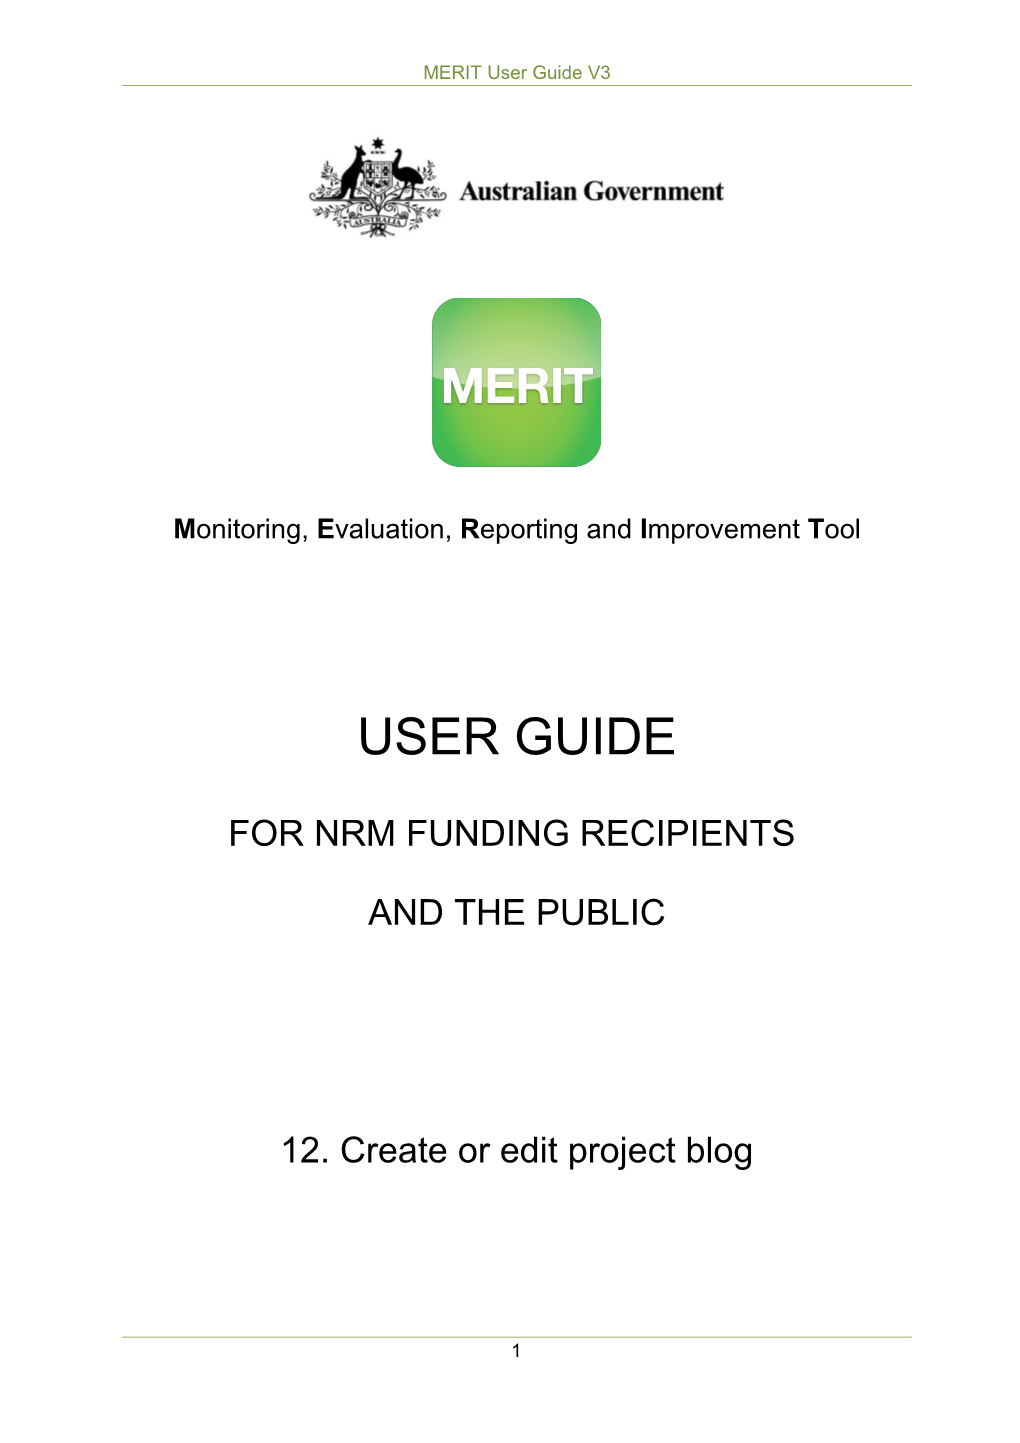 MERIT User Guide 12 Create Or Edit Project Blog